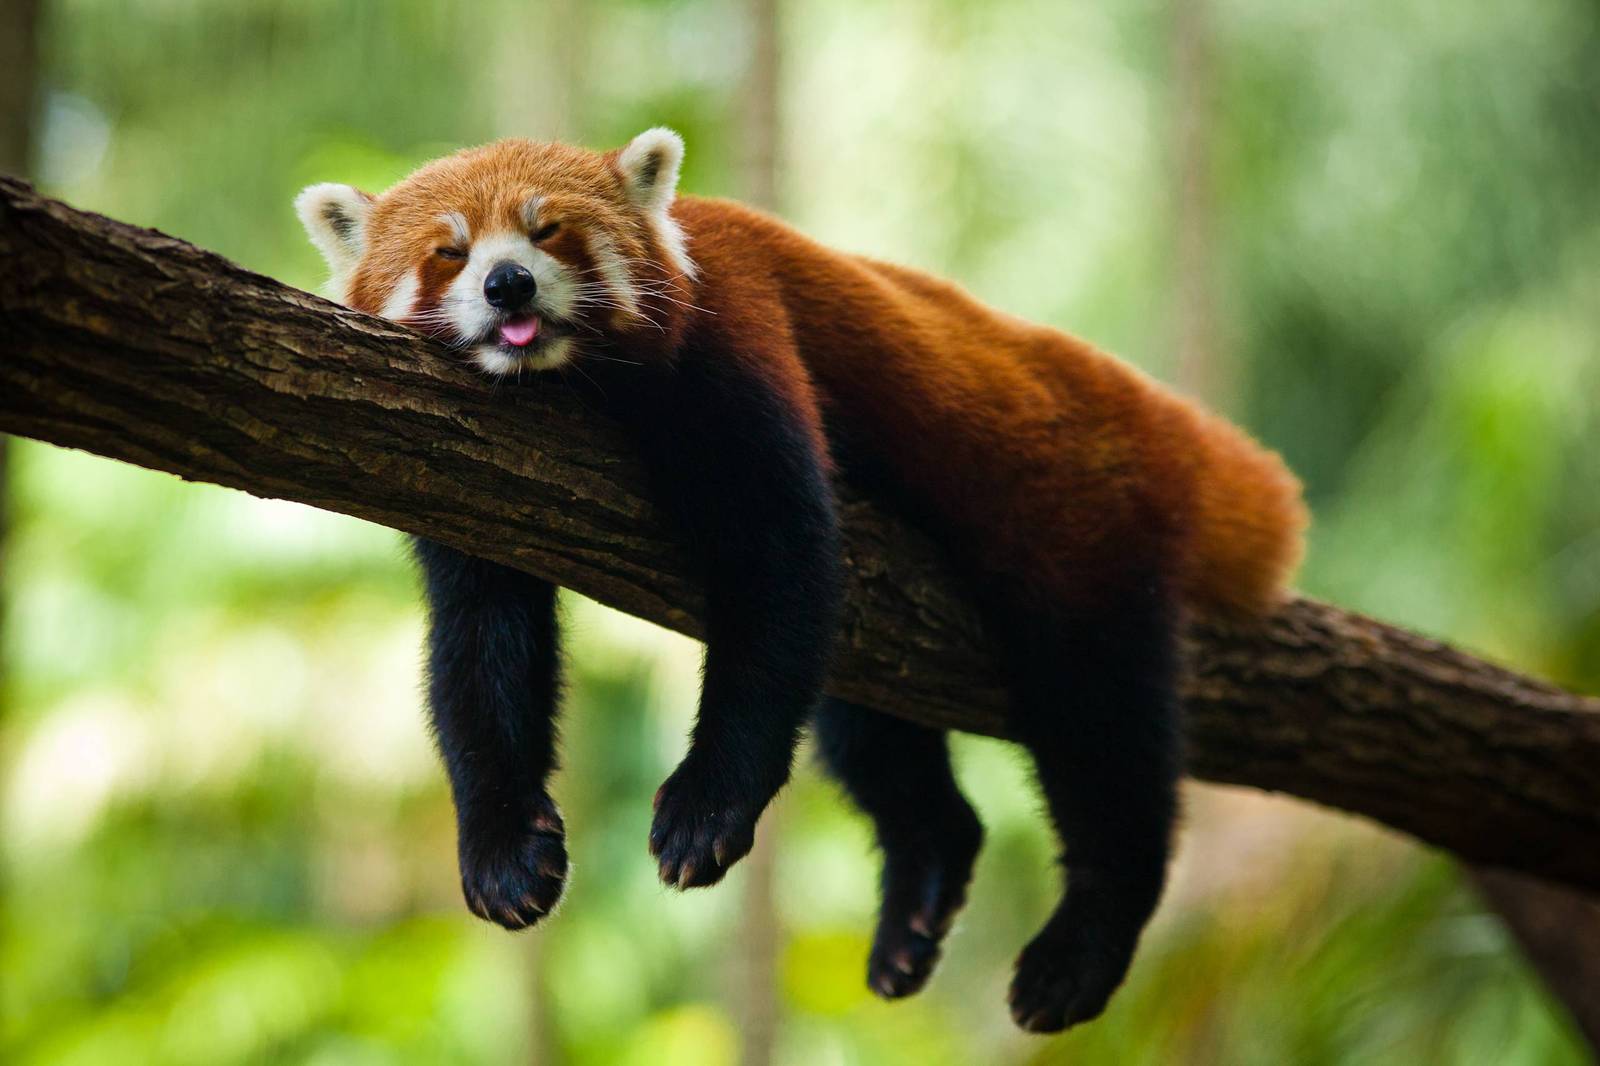 Red Panda sleeping in a tree